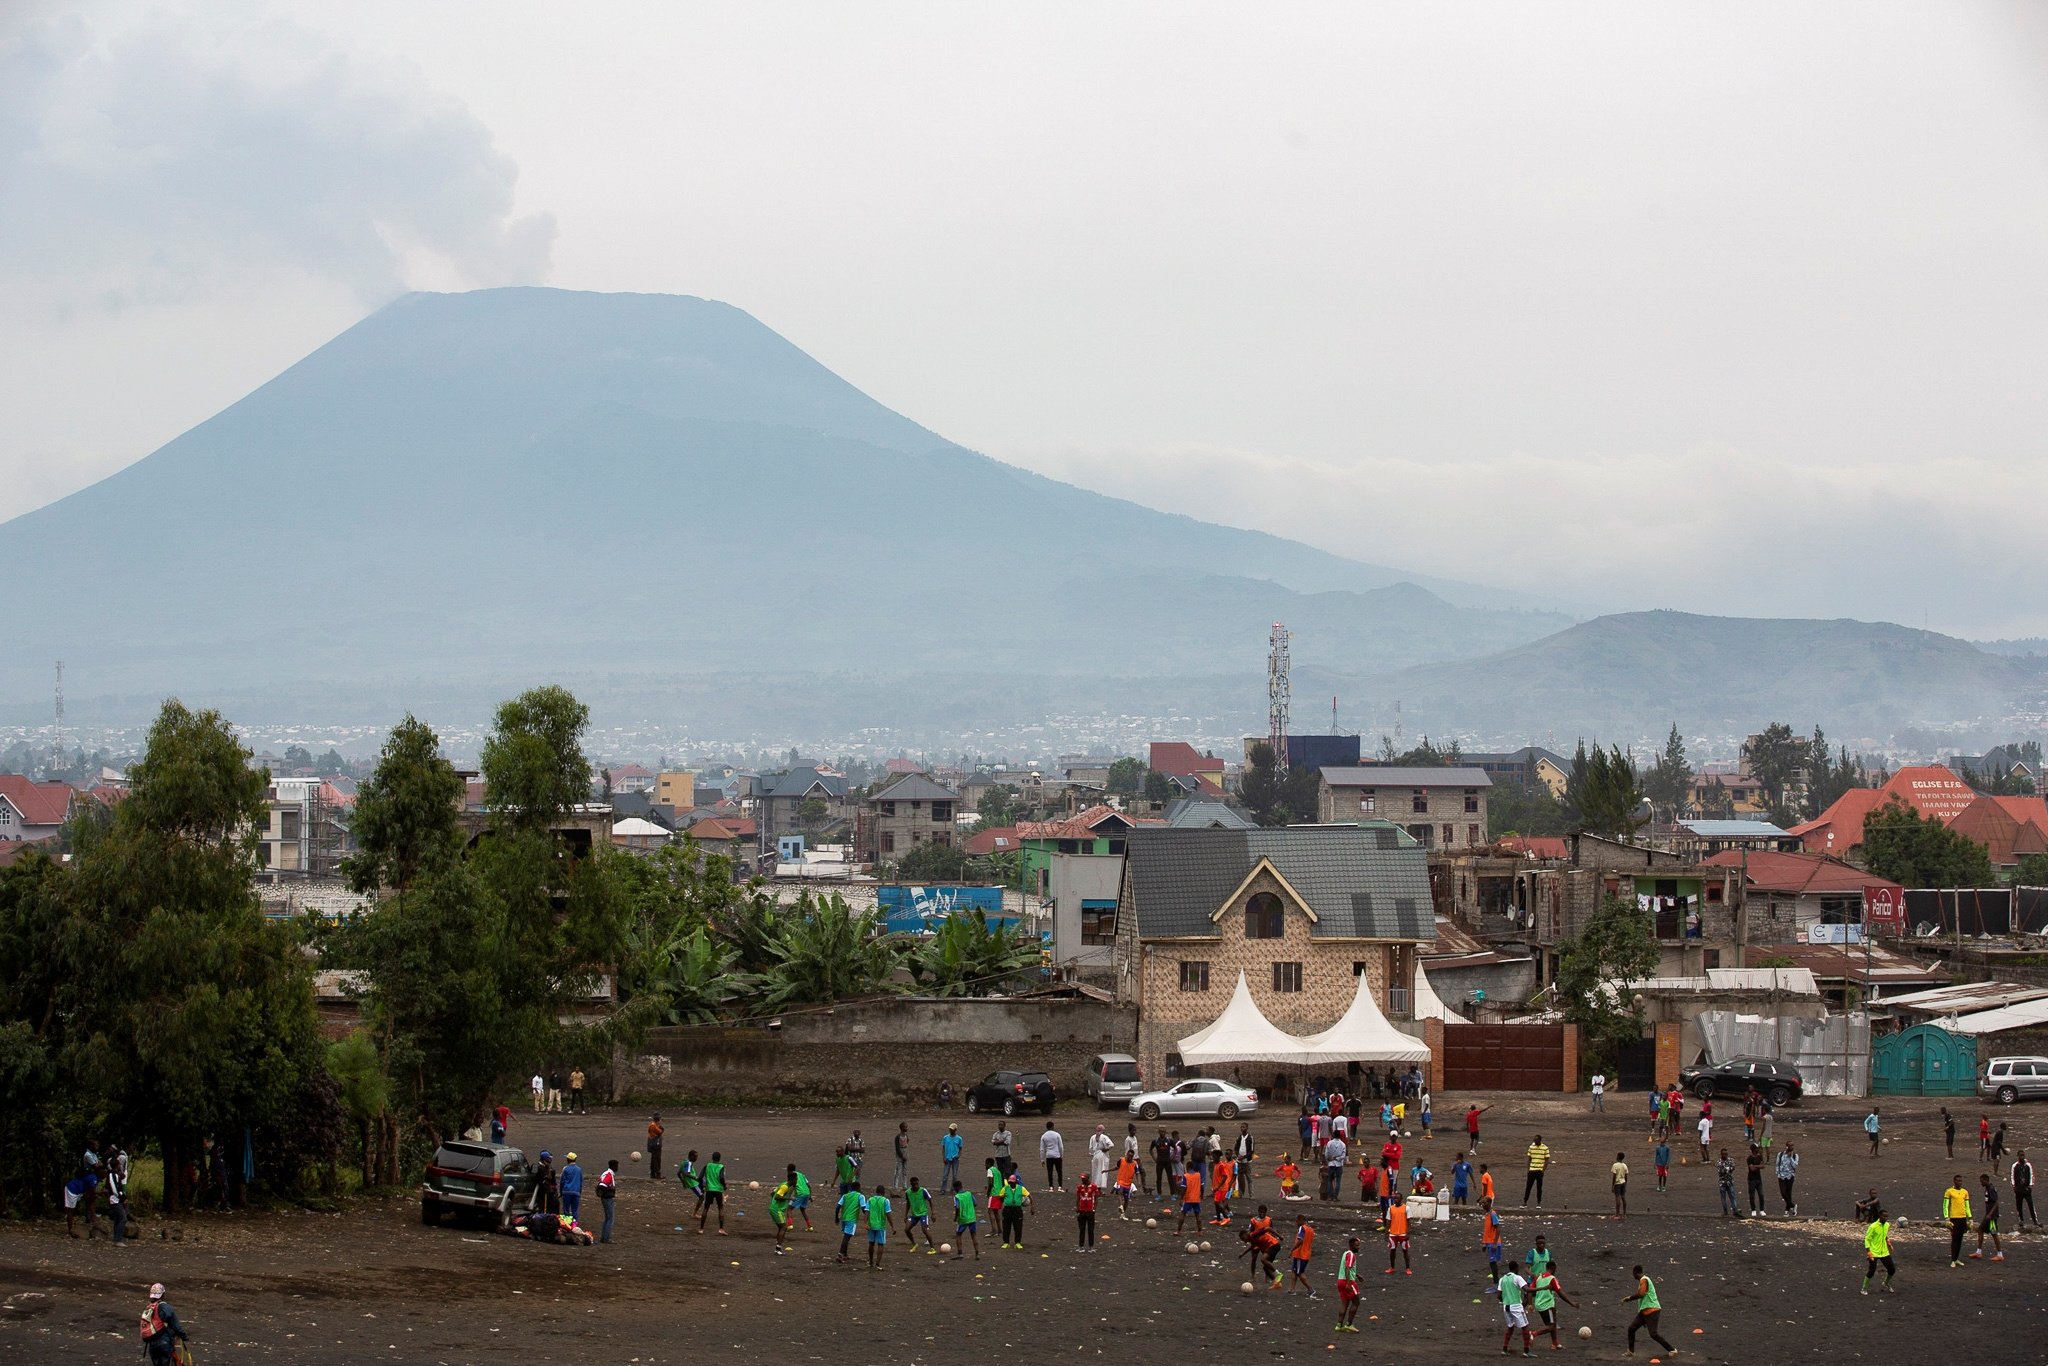 Dr Congo S Nyiragongo Volcano Erupts Triggering Panic In Goma Daily Sabah